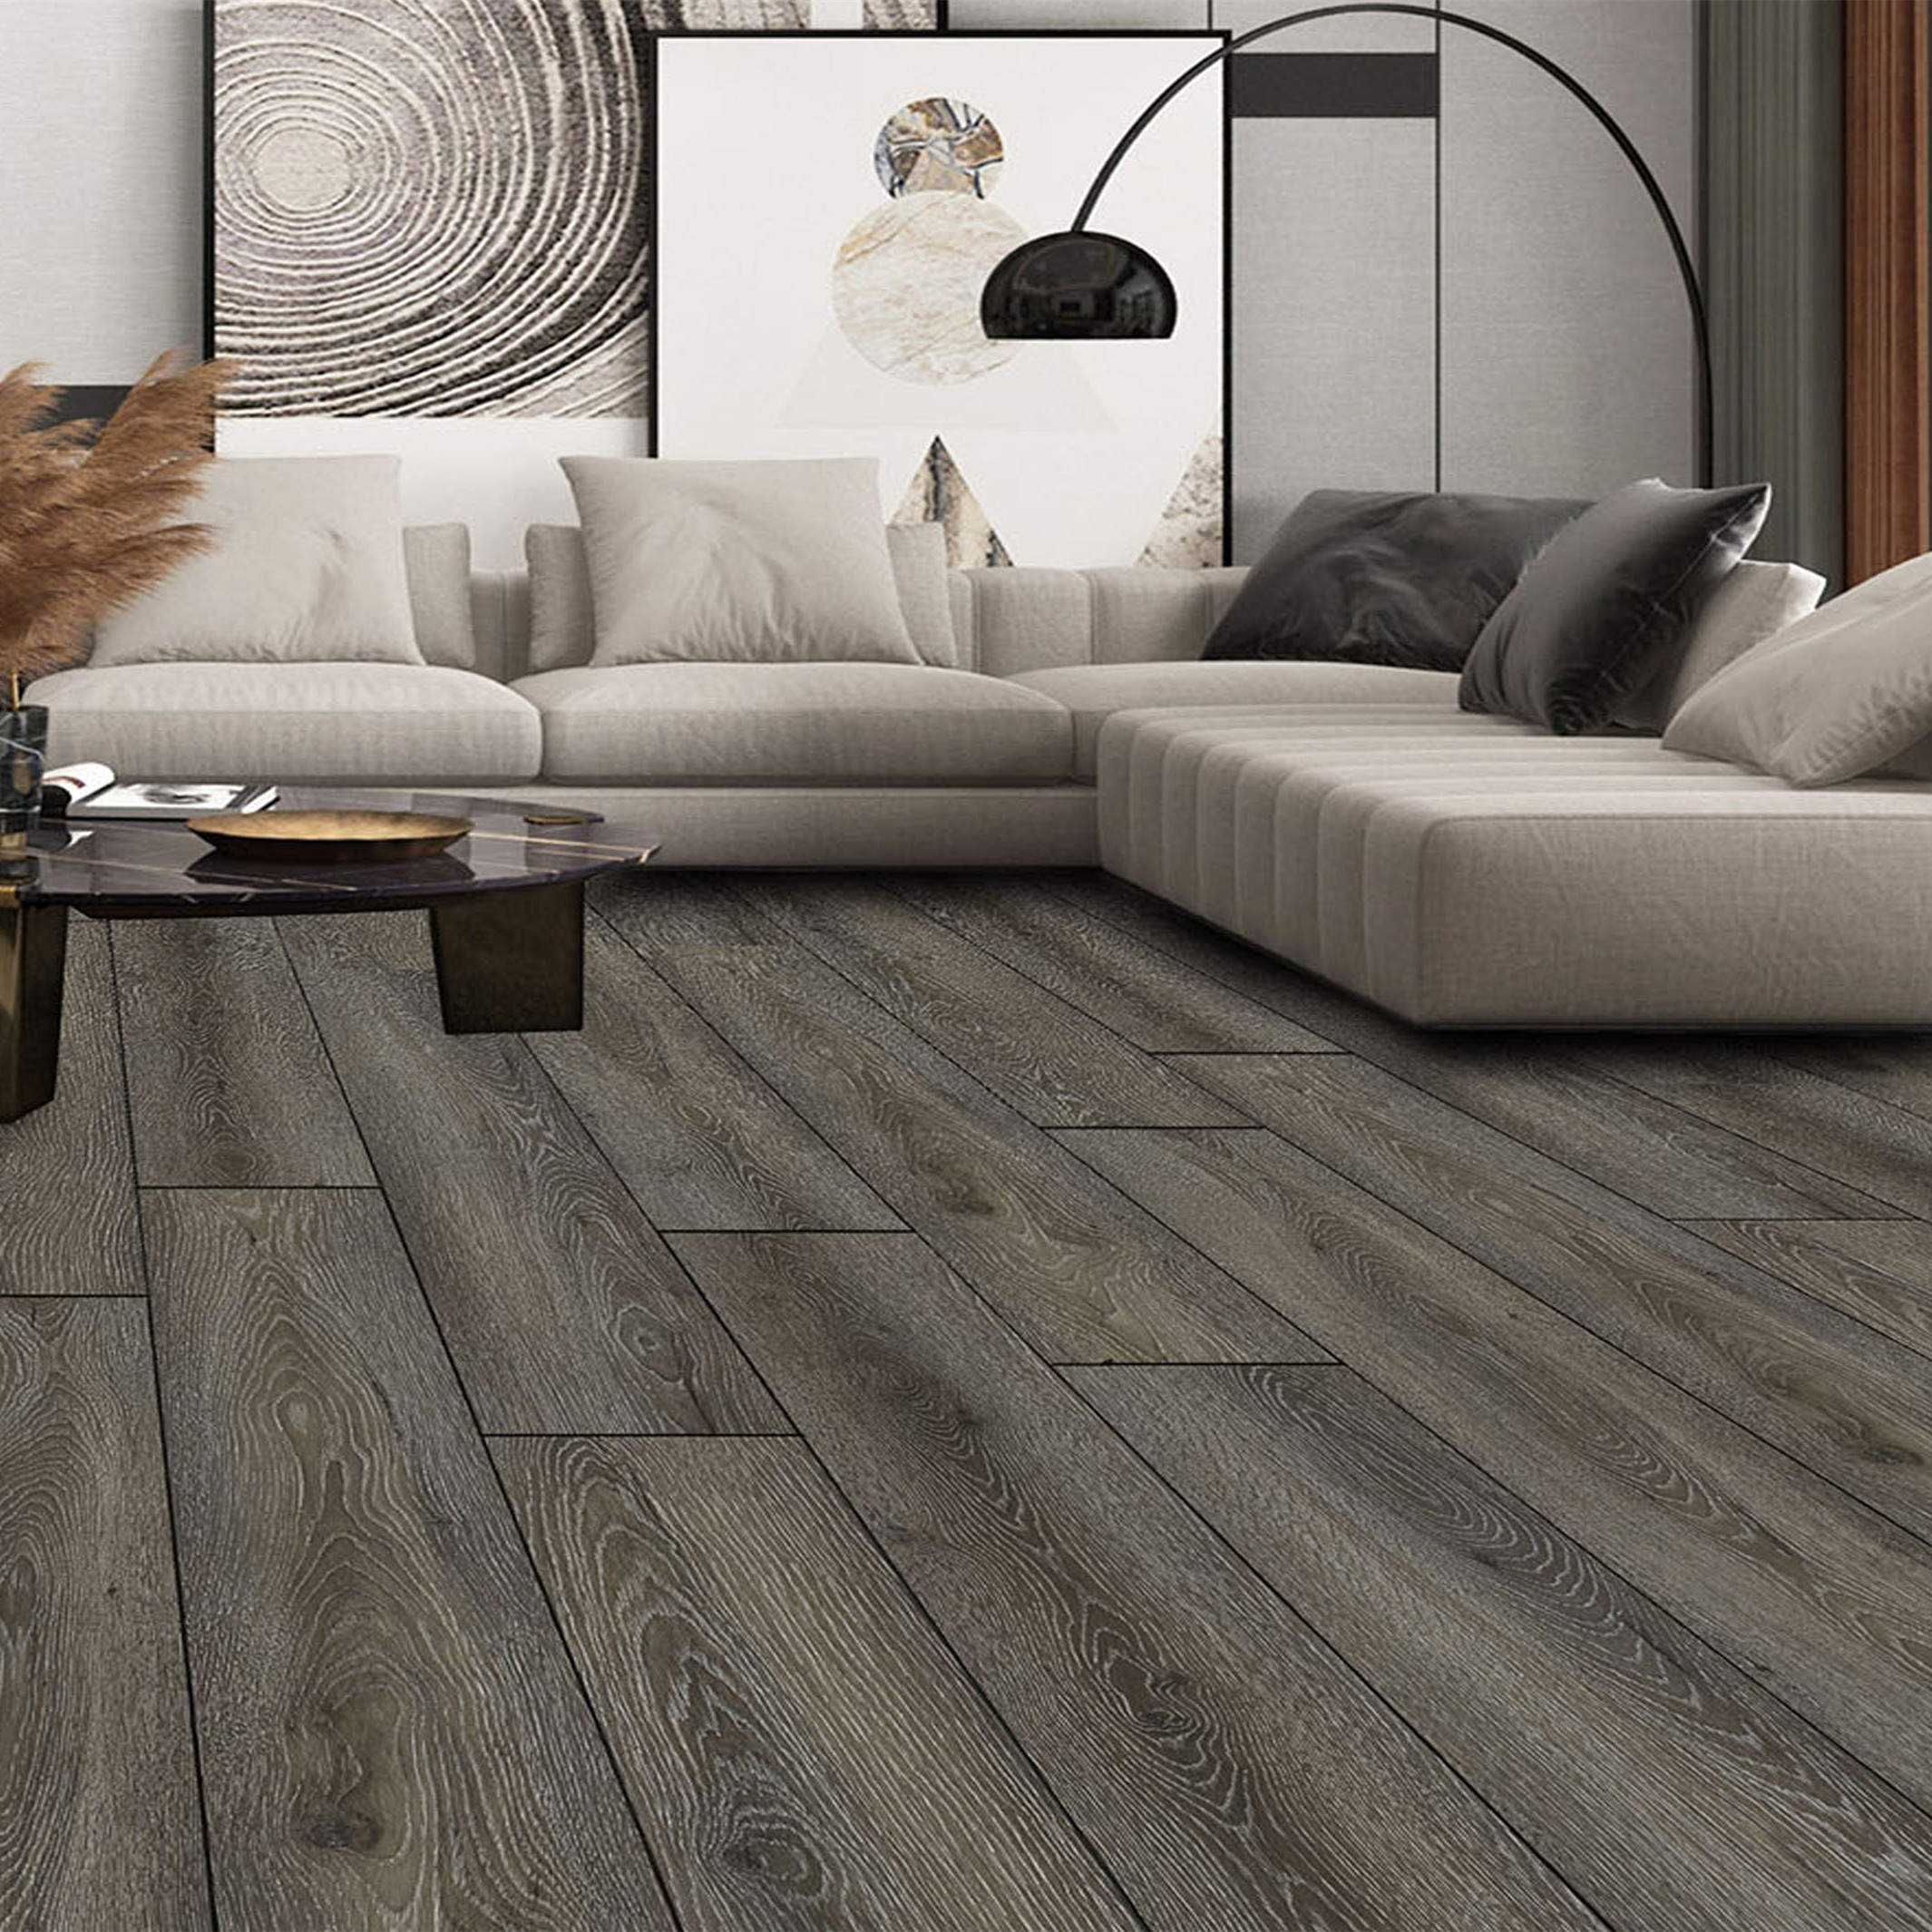 PriceList for Natural Bamboo Flooring -
 Interior of room vinyl flooring plank from China supplier – Kangton